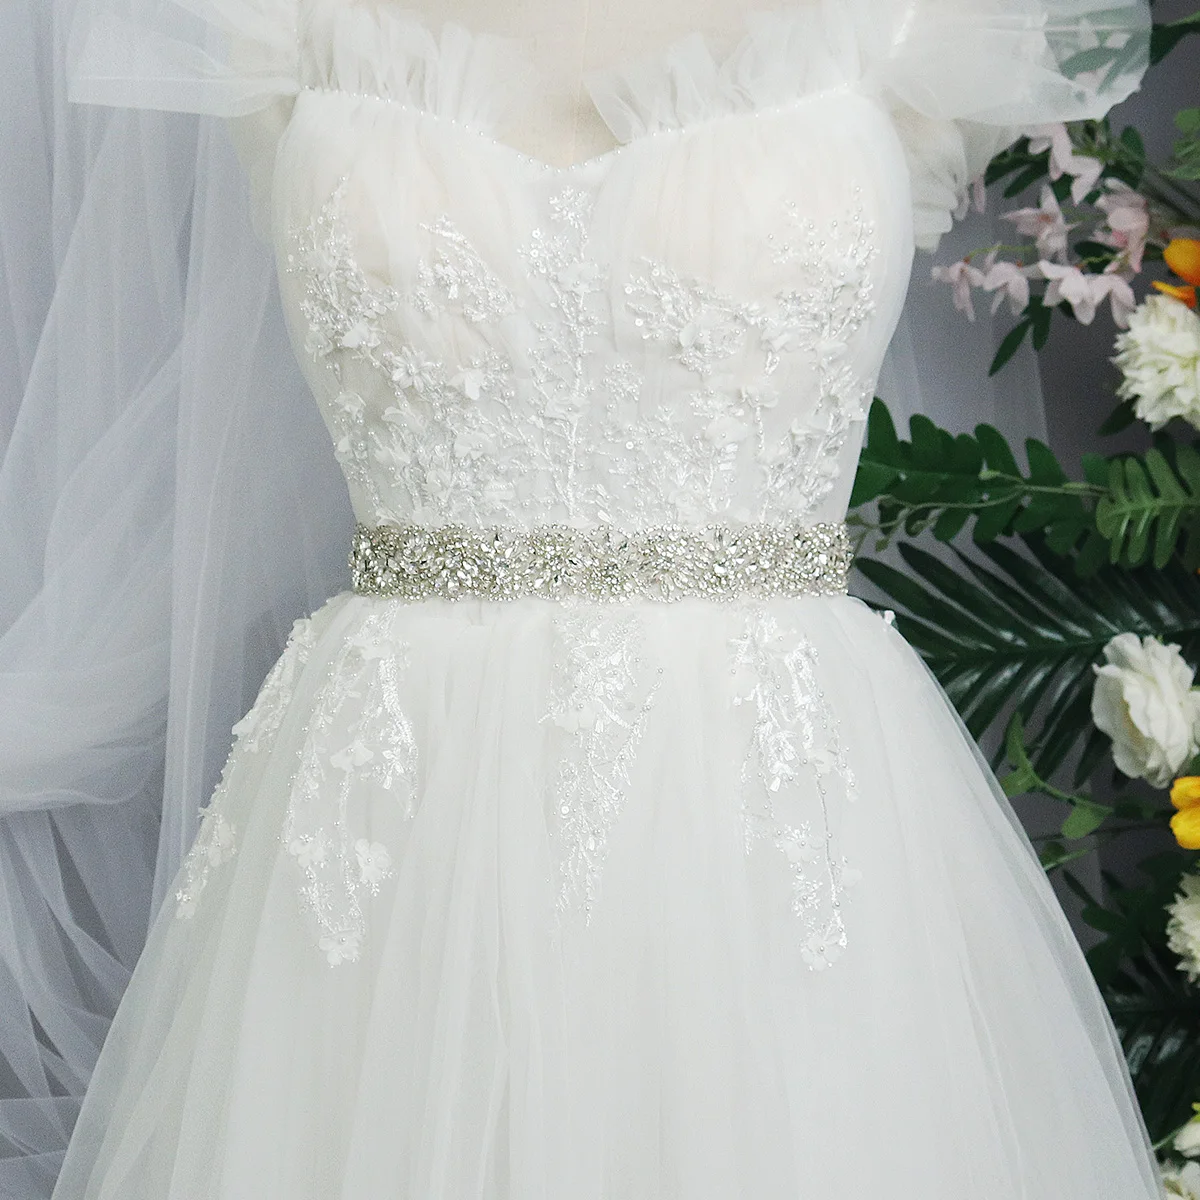 Rhinestone Bridal Belt for Wedding Dress Accessories Silver Color Crystal Bride Belt Sash Ribbon Party Bridesmaid Gift